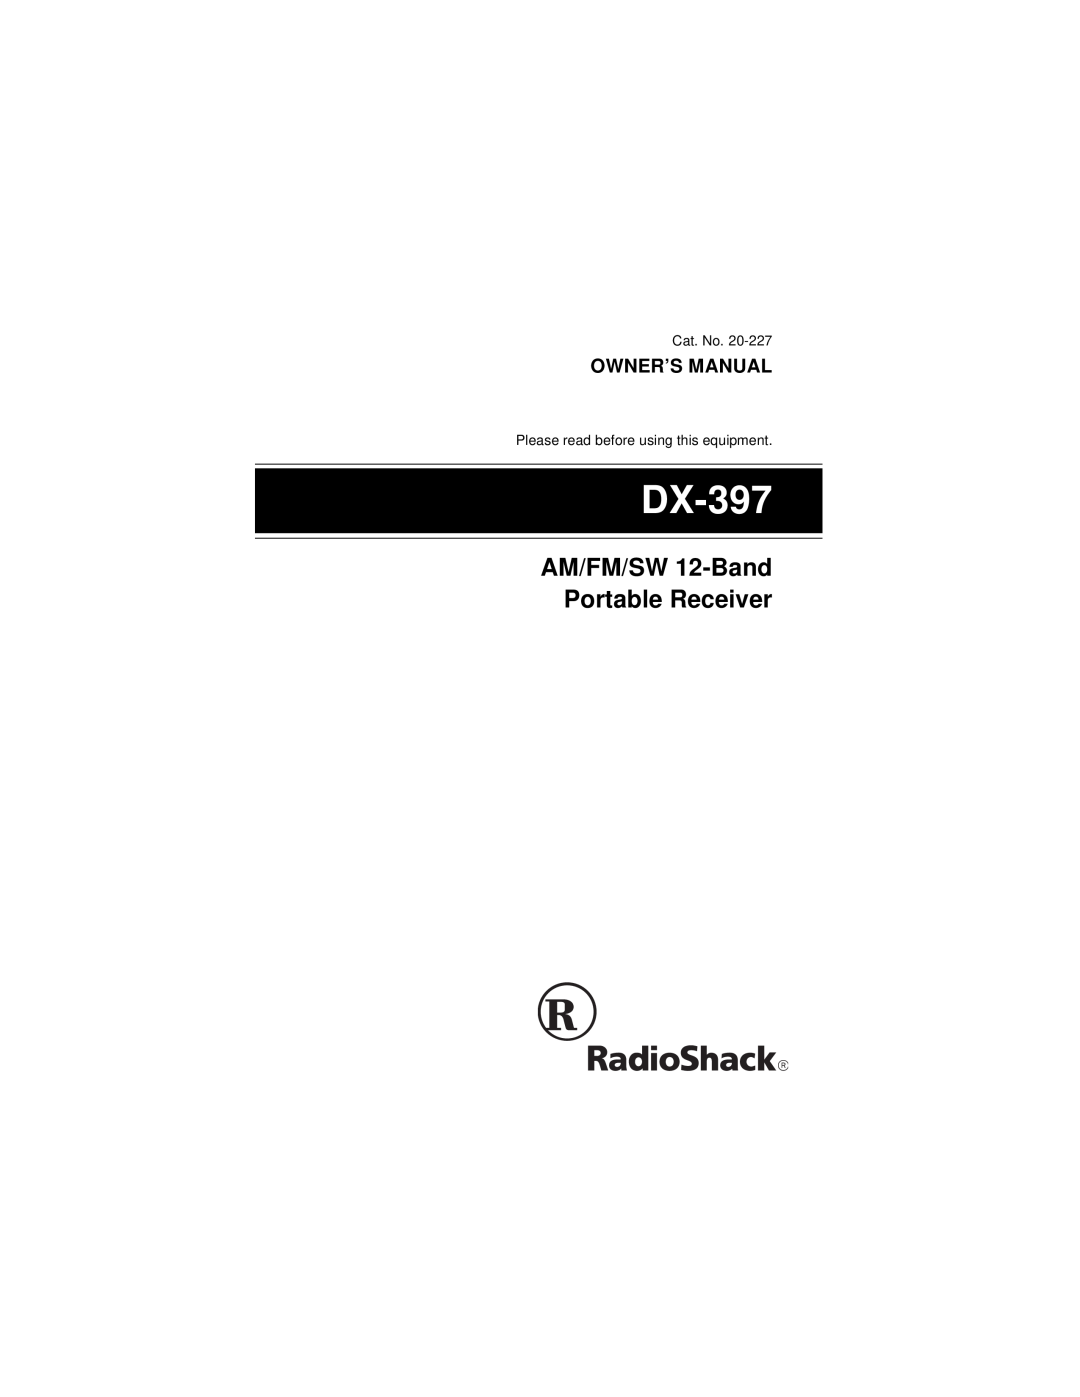 Radio Shack DX-397 owner manual AM/FM/SW 12-BandPortable Receiver 